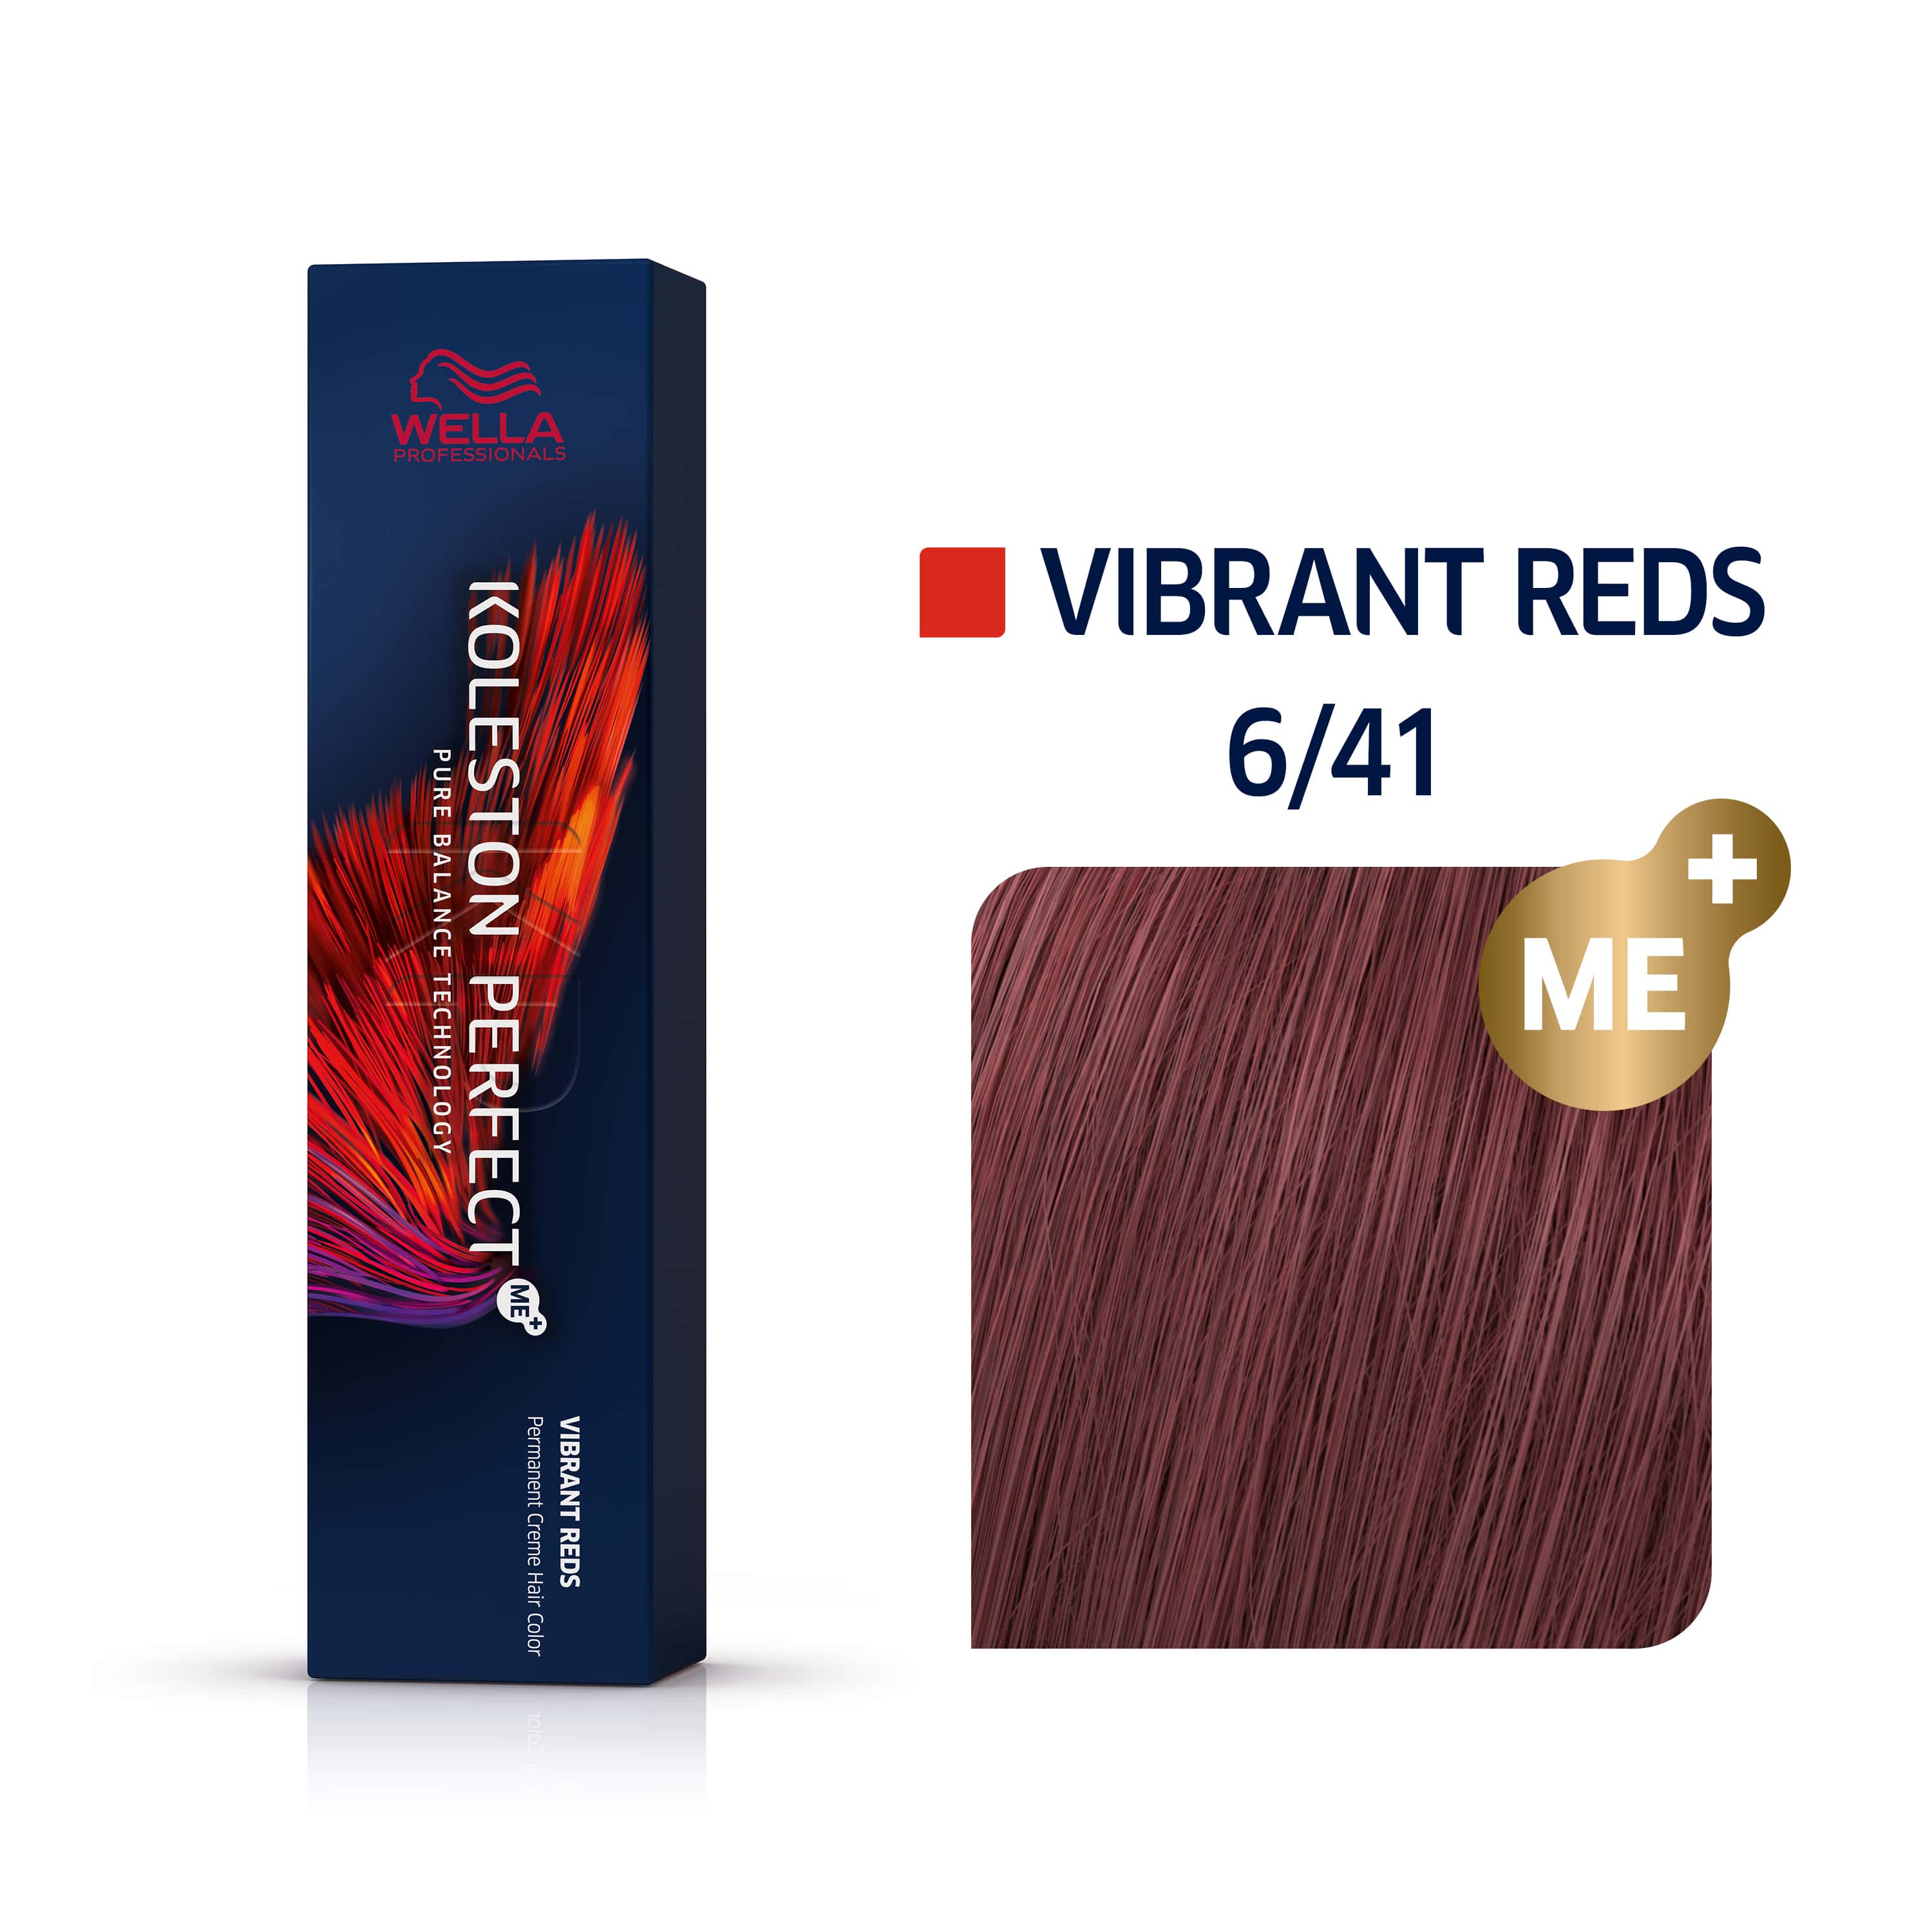 a box of wella vibrant reds hair dye